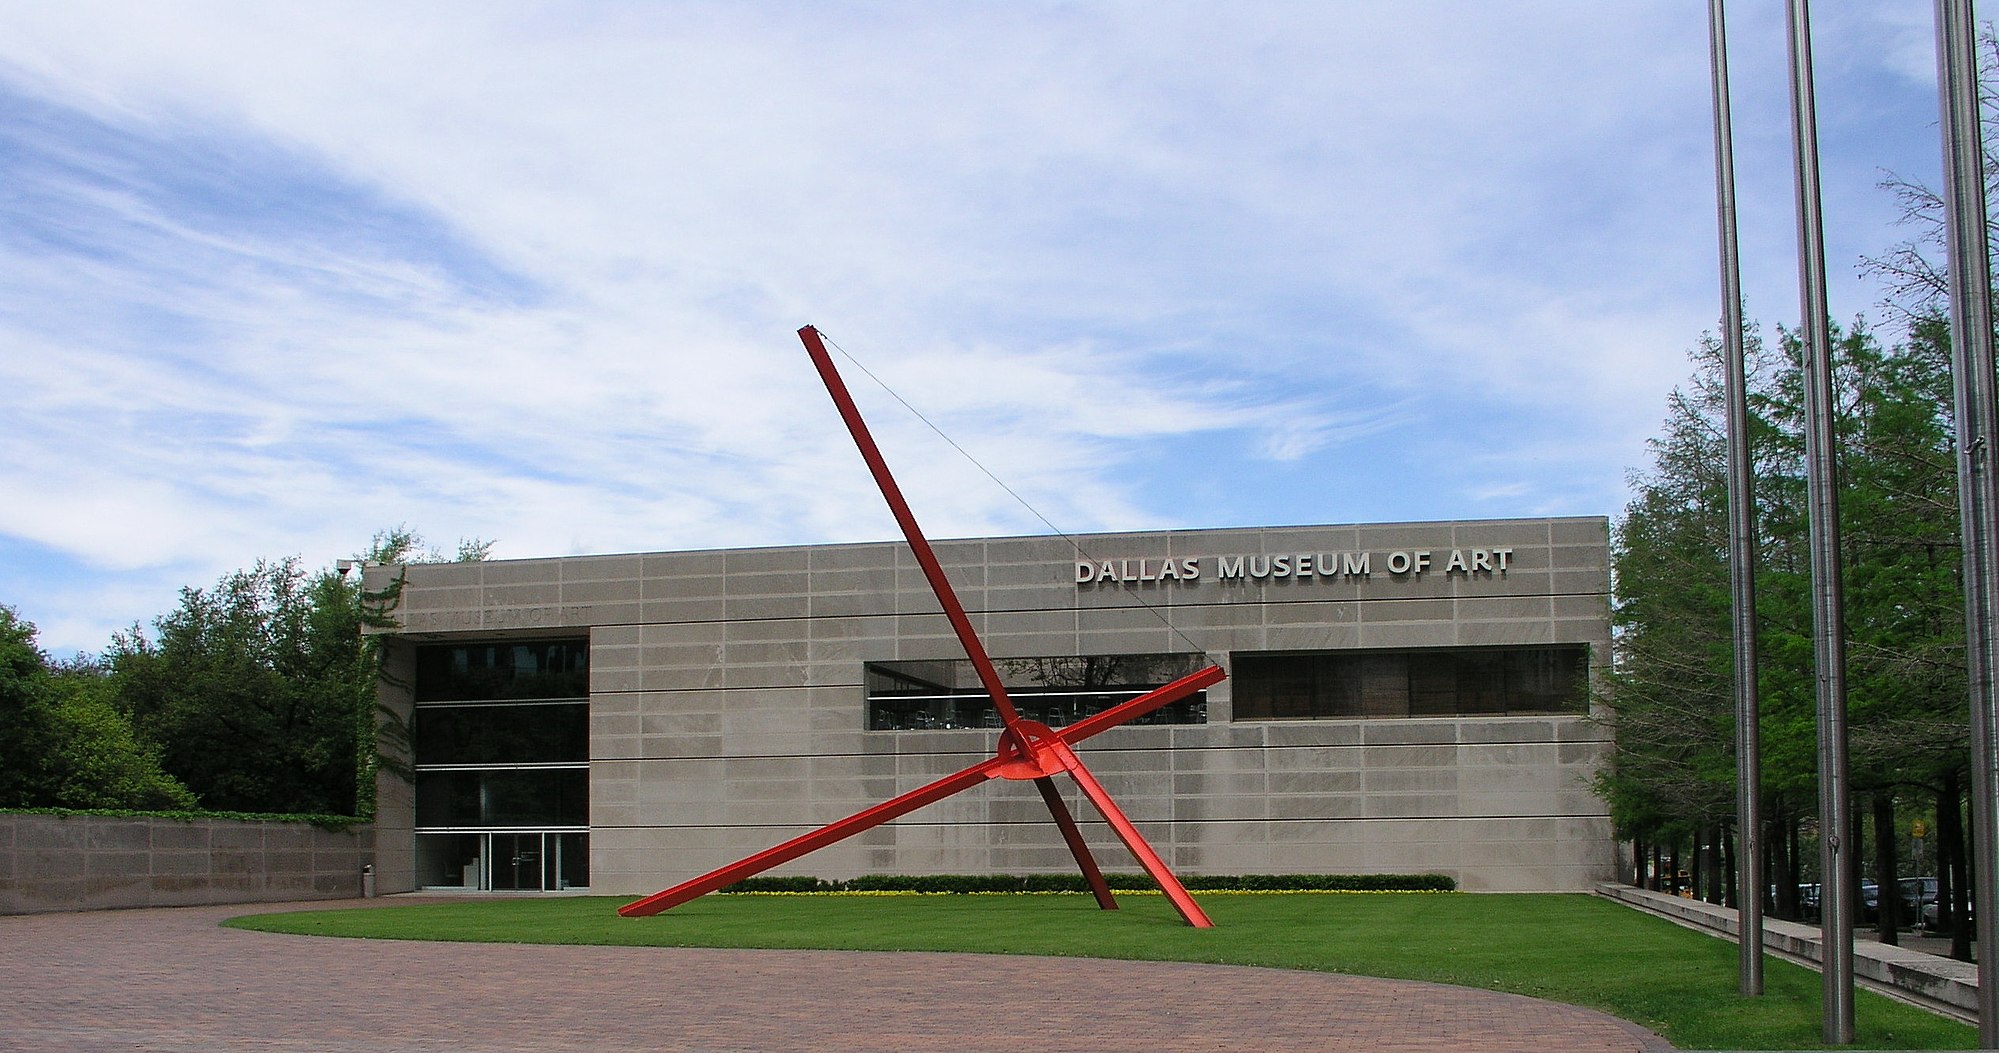 Dallas Museum of Art  Sartle - Rogue Art History